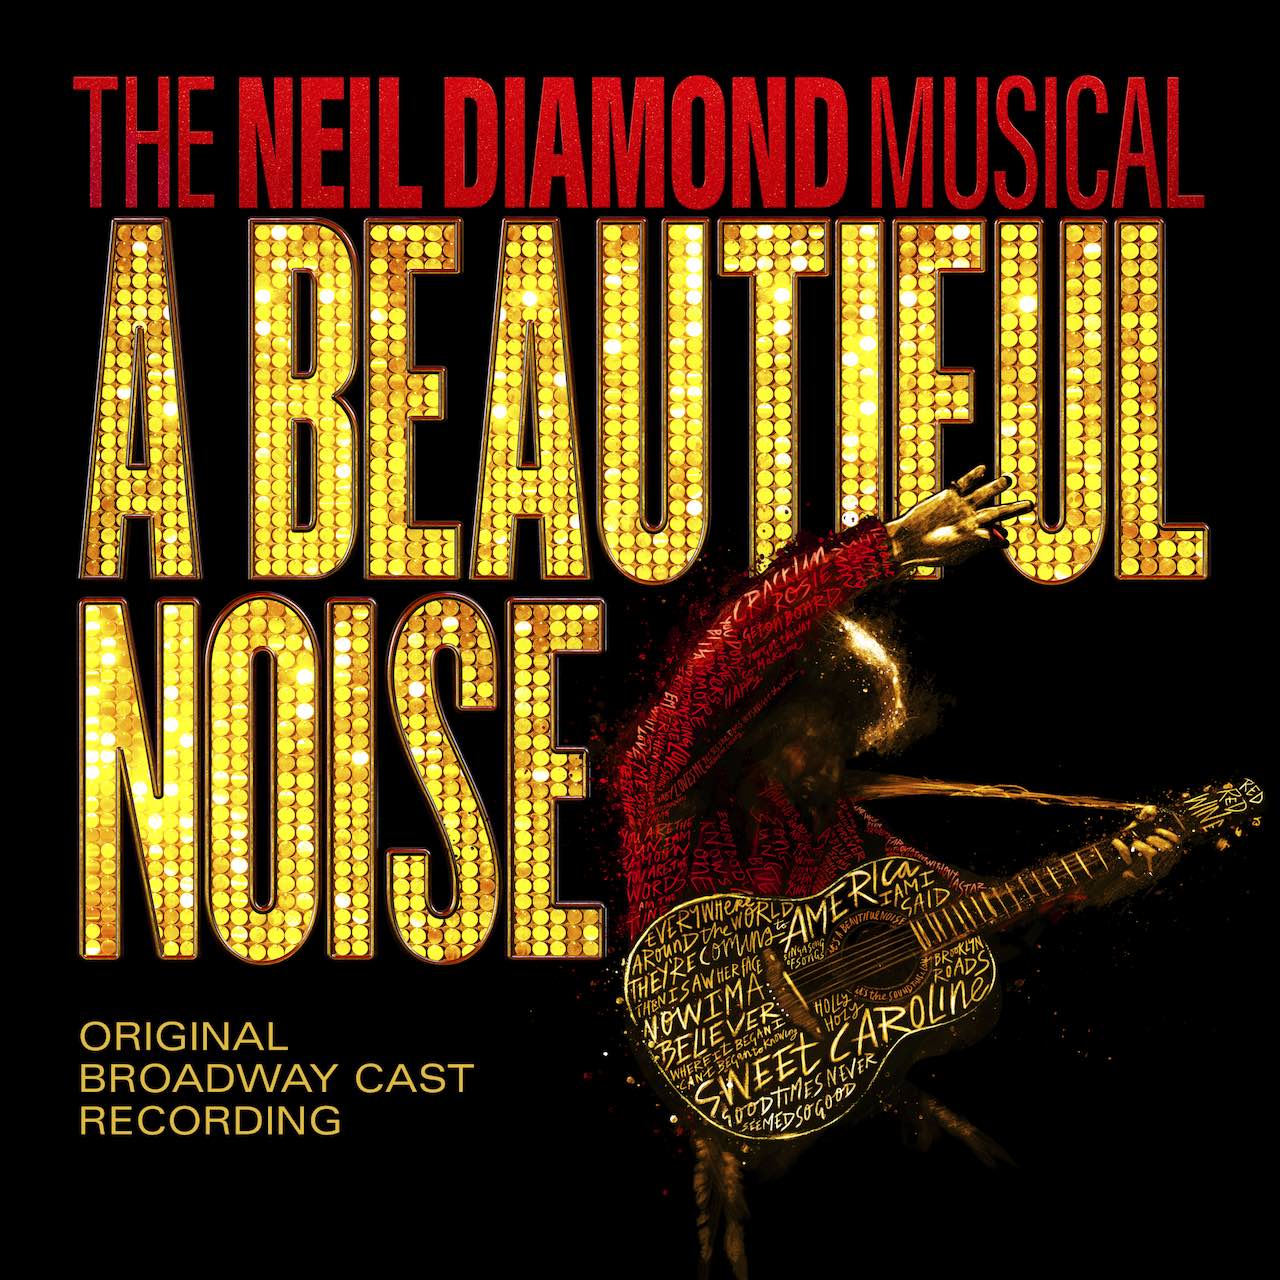 Broadway Cast Album For Neil Diamond Musical 'A Beautiful Noise' Due